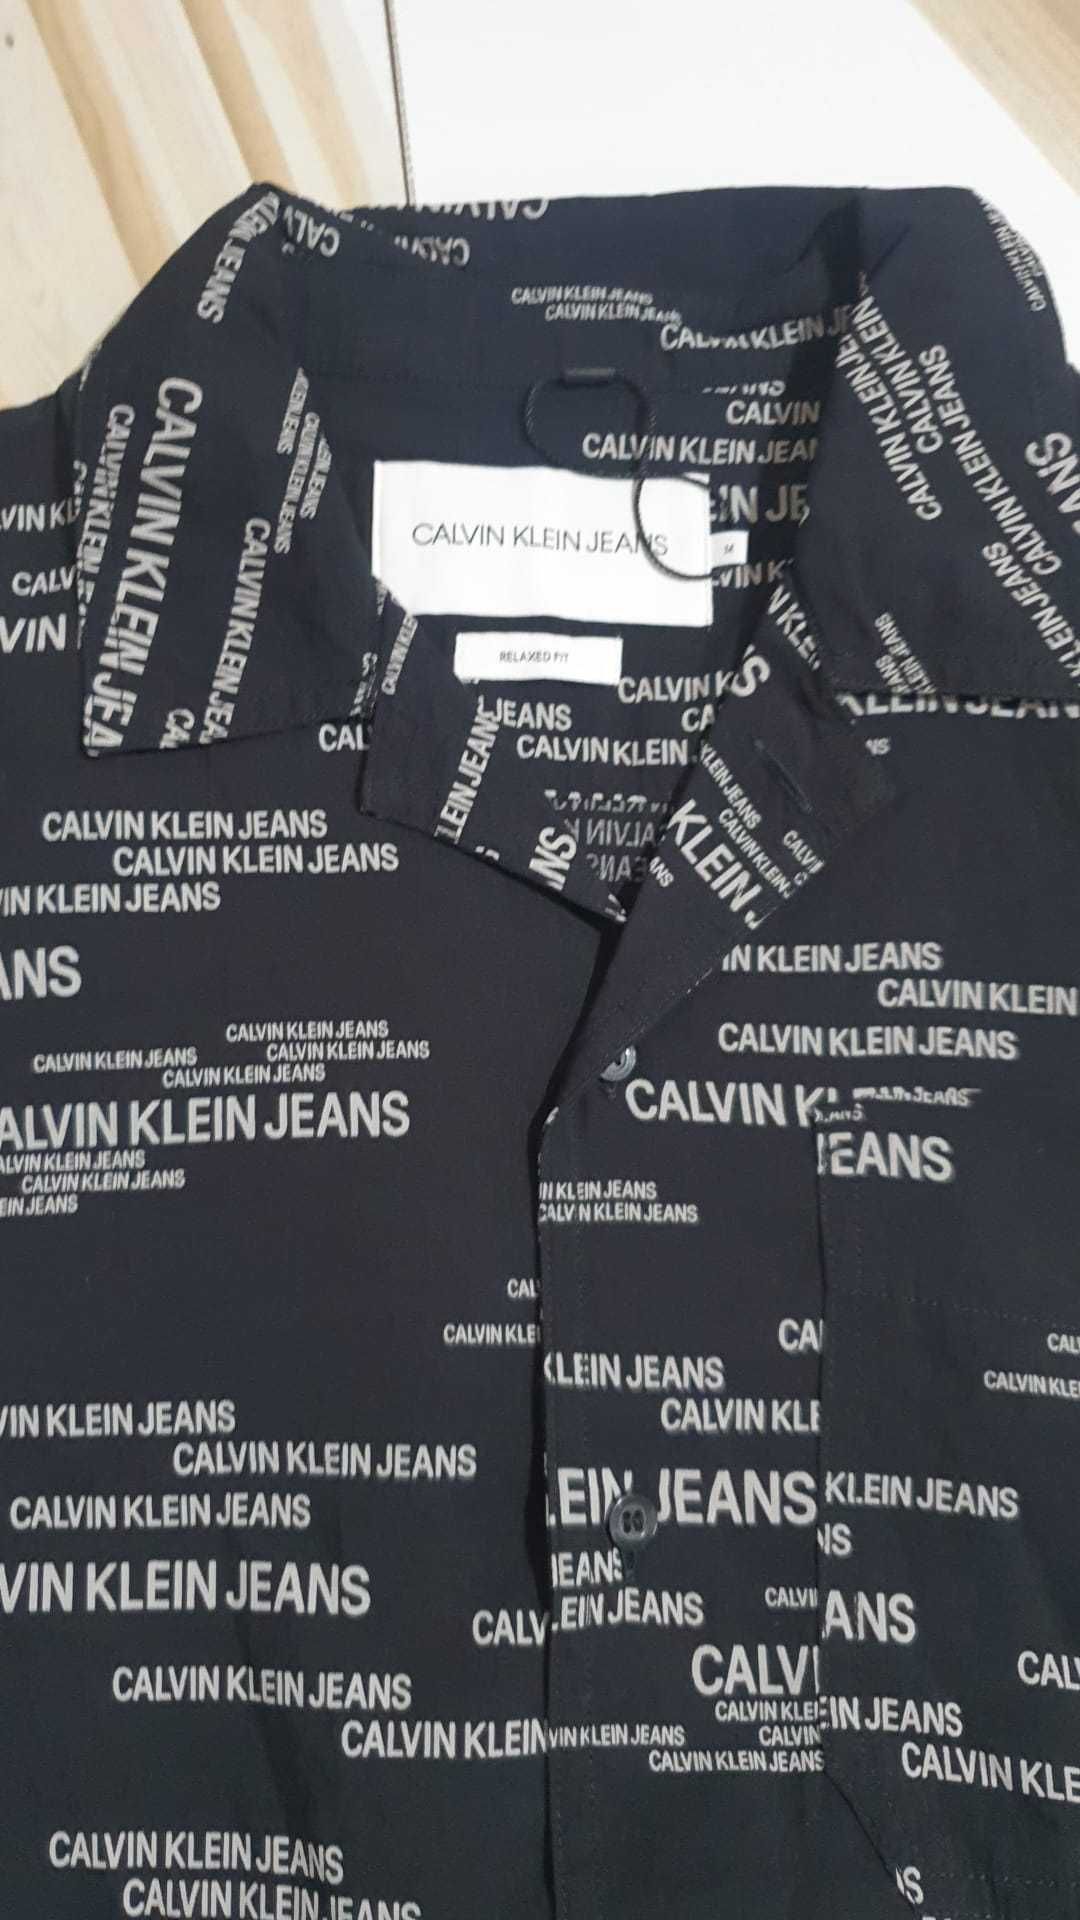 Vand camasa Calvin Klein maneca scurta masura  M  originala noua